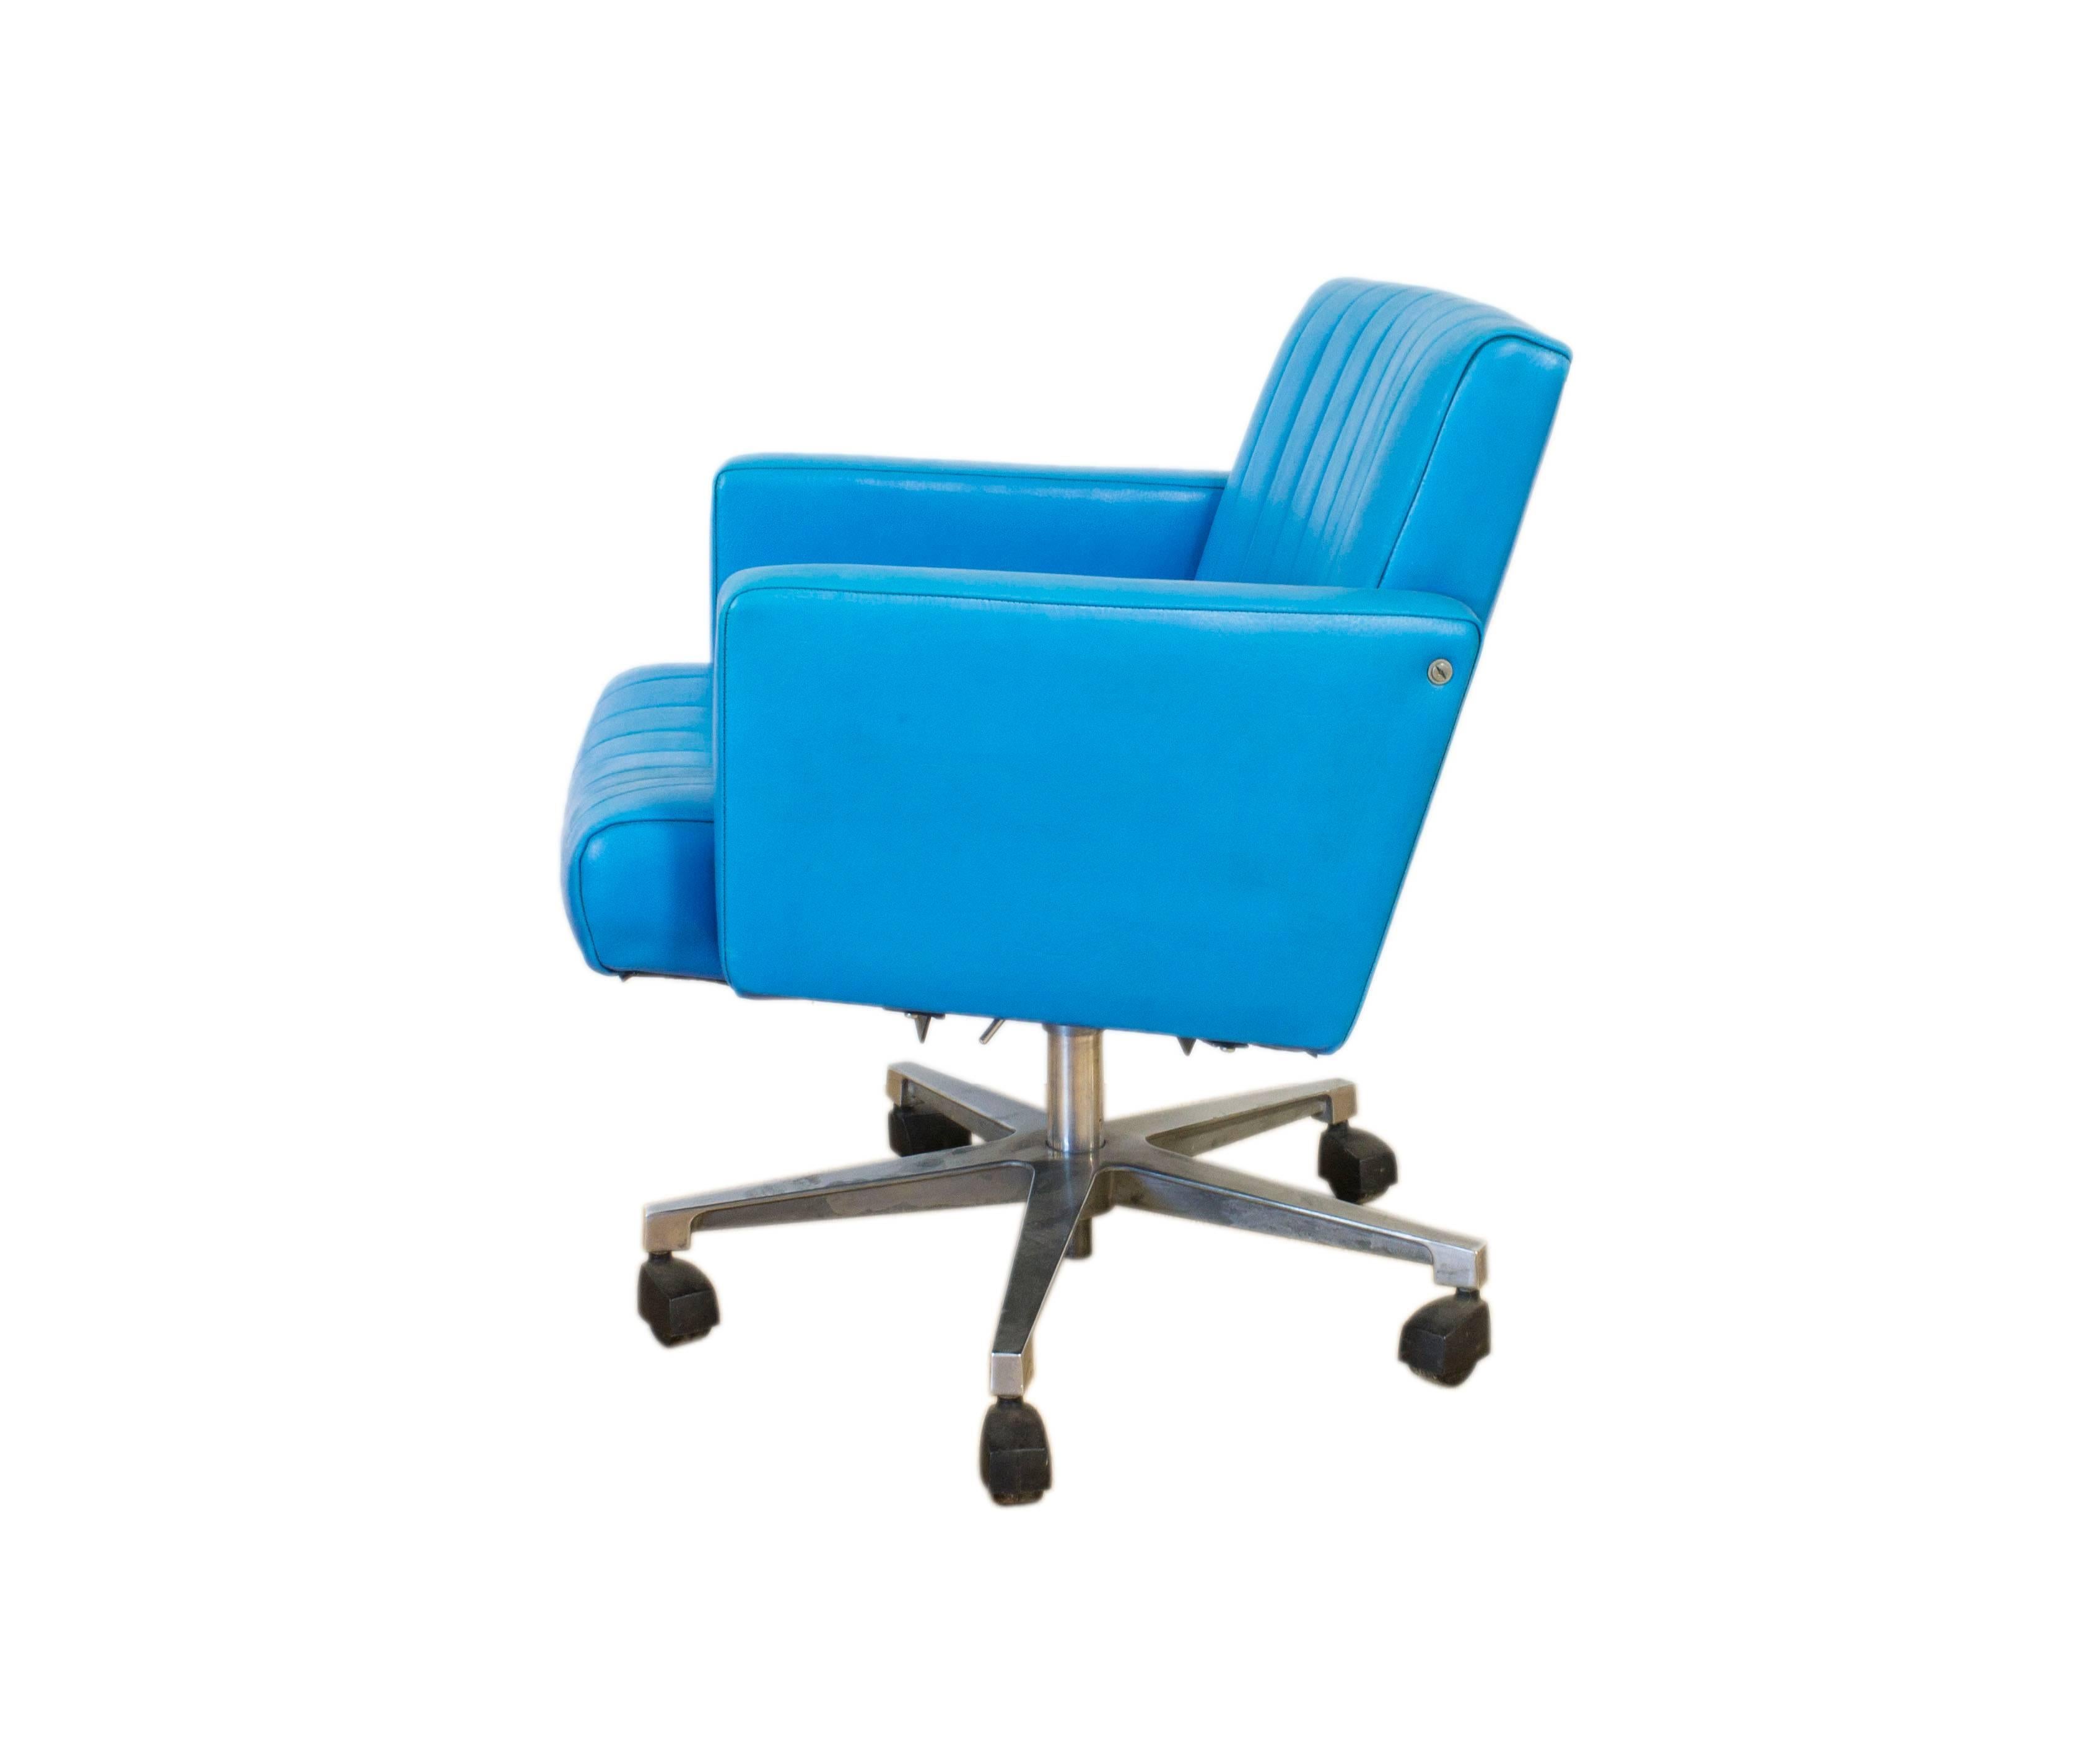 Mid-Century Modern Turquoise Leather Swivel Armchair Desk Chair Retro G Plan Eames Era For Sale